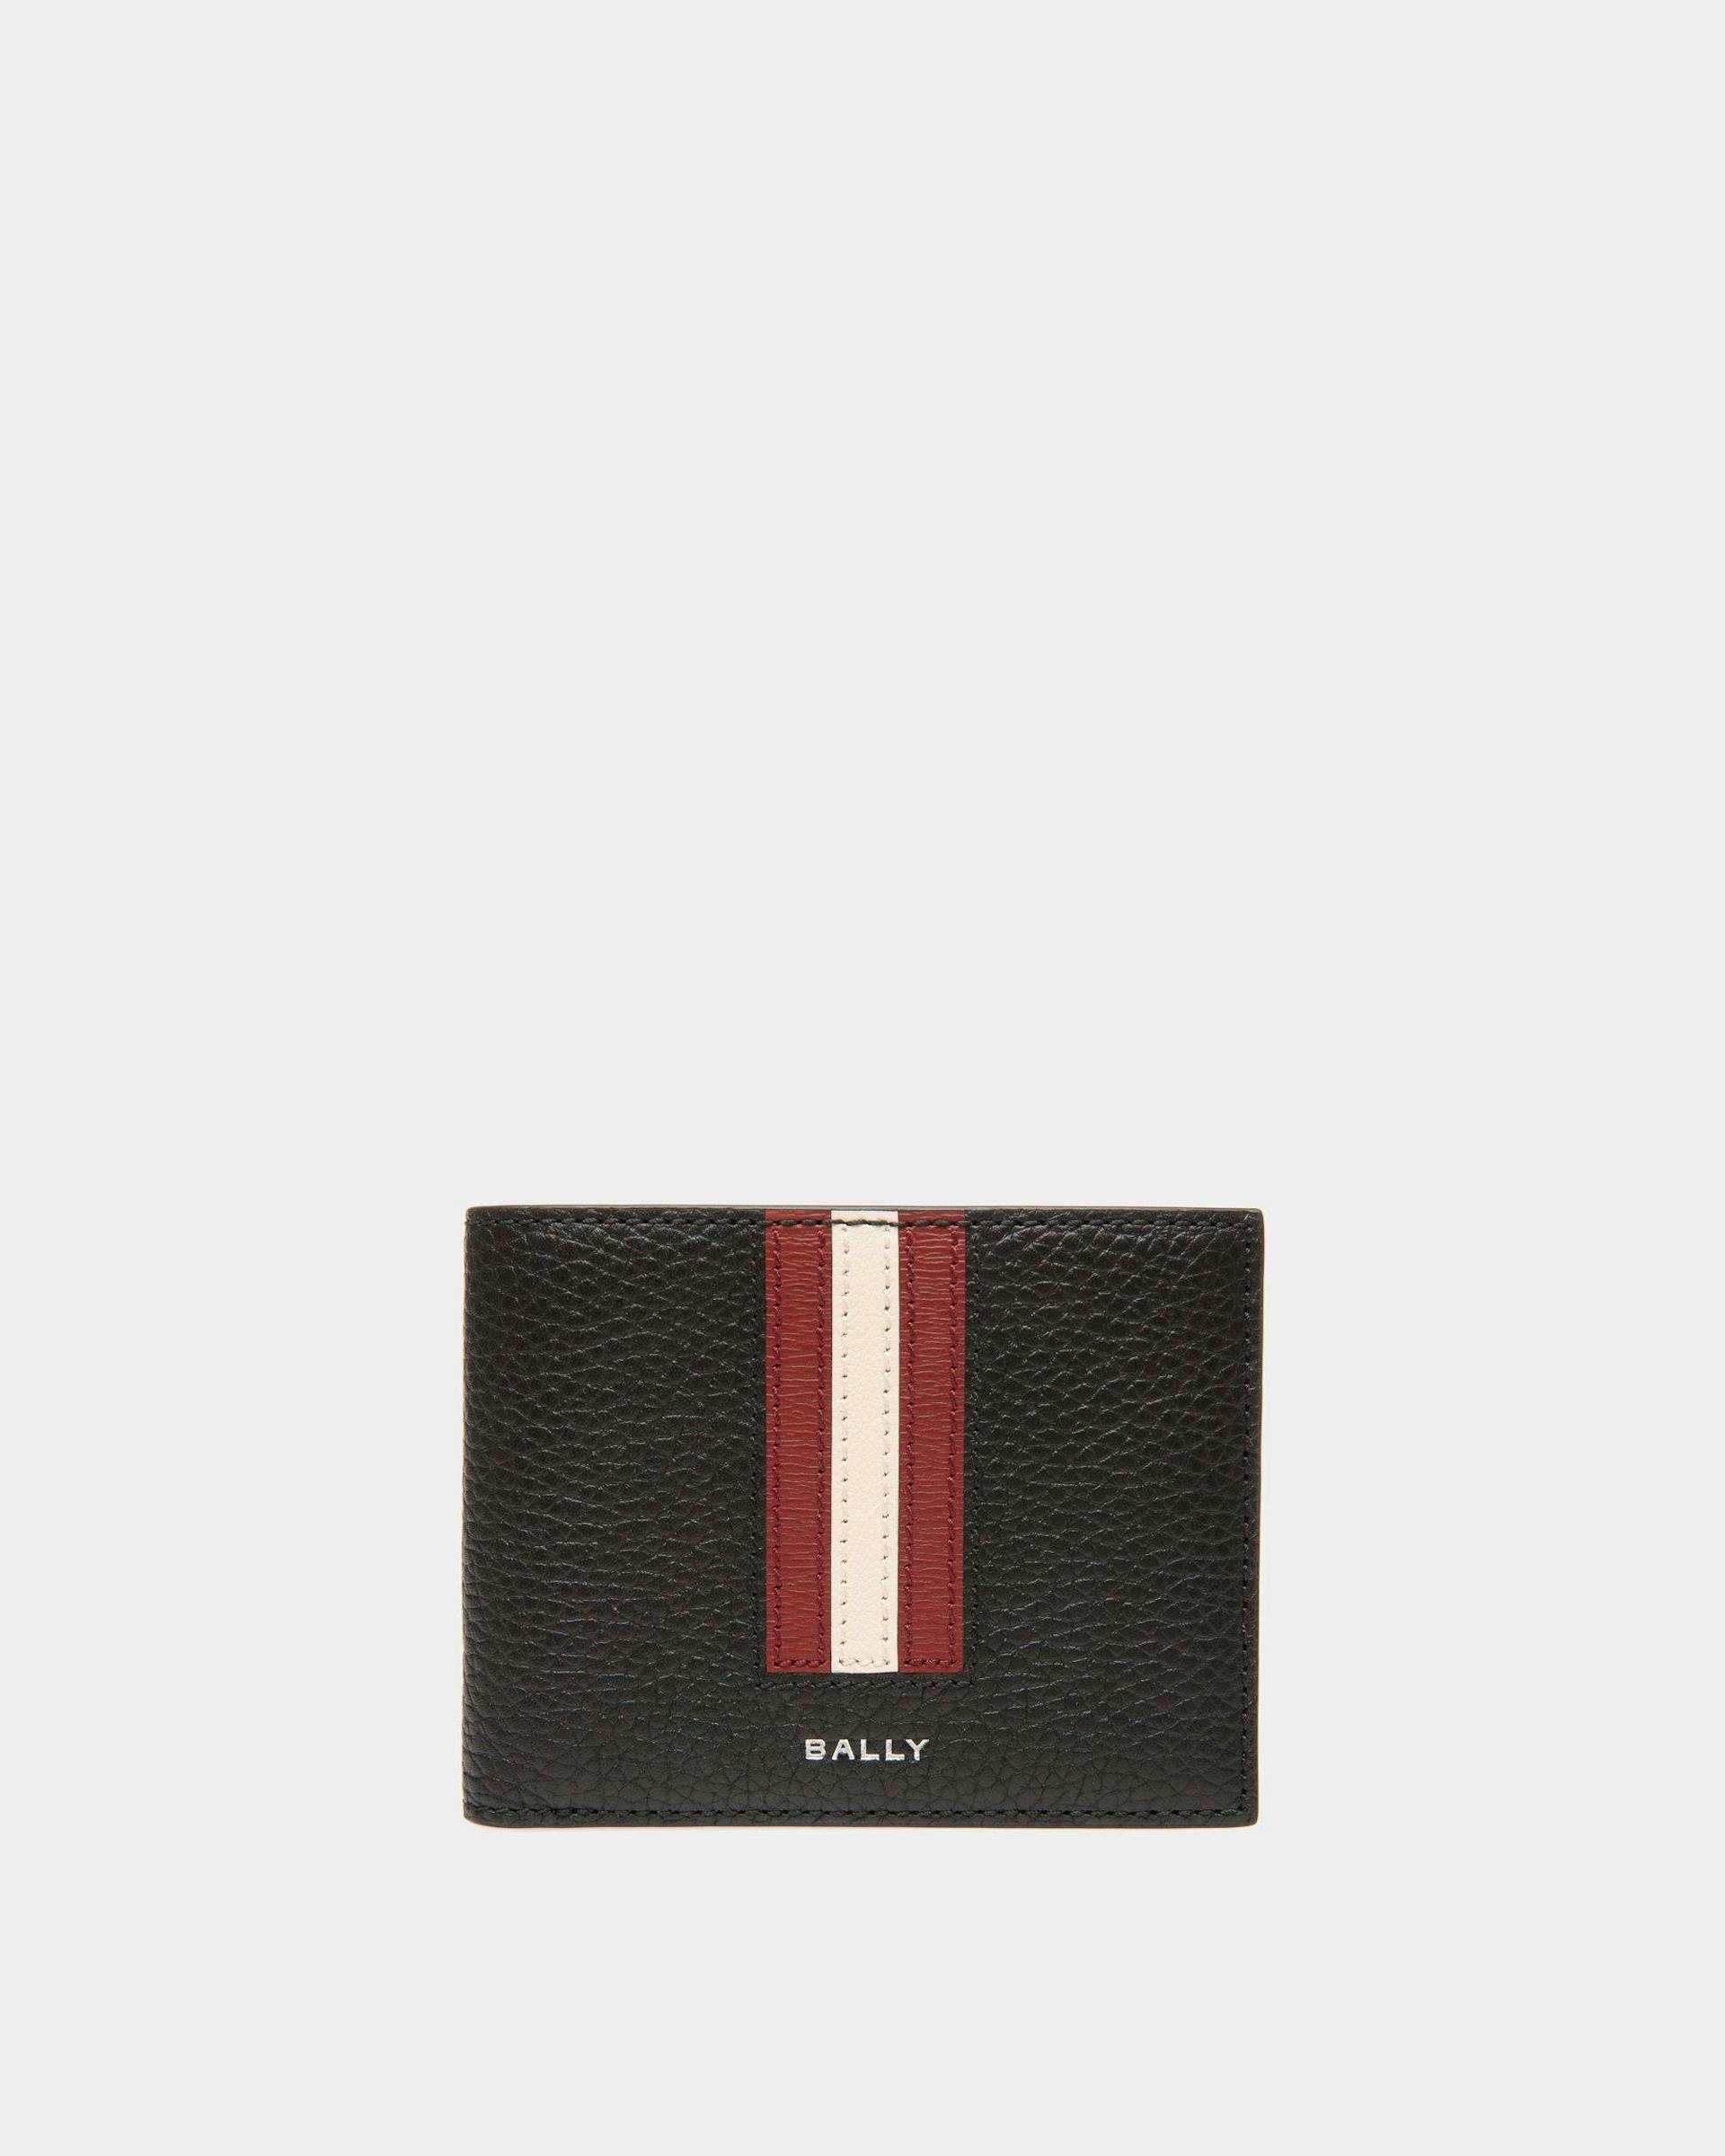 Men's Ribbon Bifold Wallet in Black Leather | Bally | Still Life Front